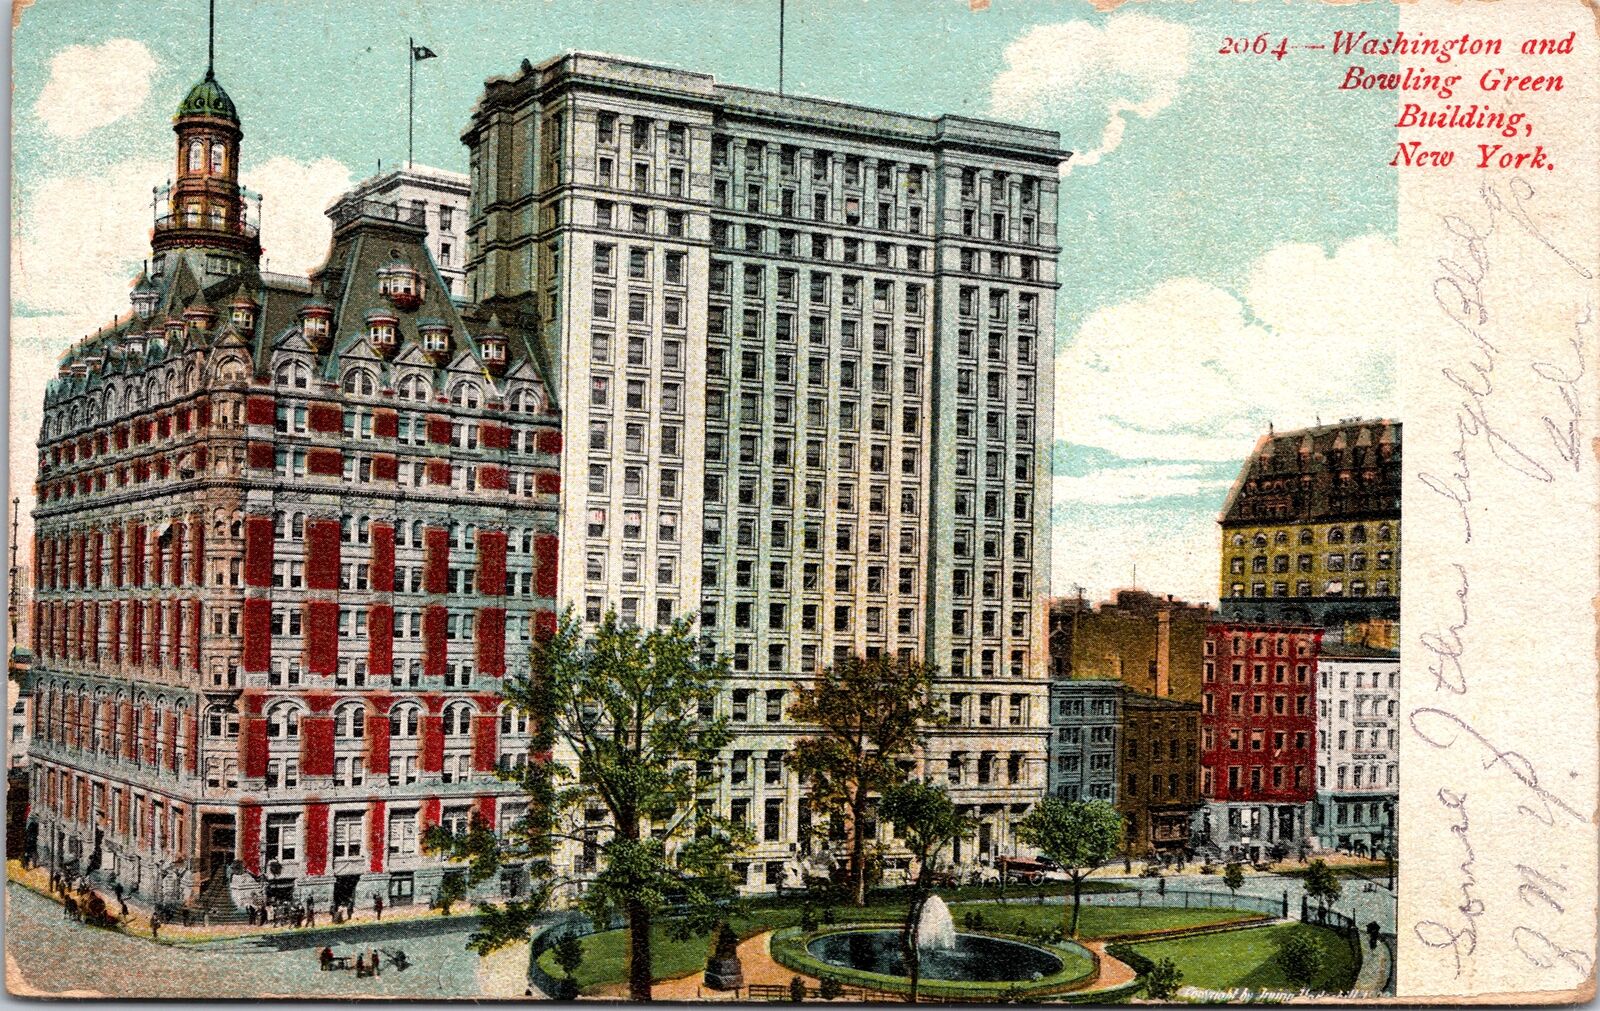 VINTAGE POSTCARD WASHINGTON & BOWLING GREEN BUILDINGS NEW YORK CITY c. 1902-1905